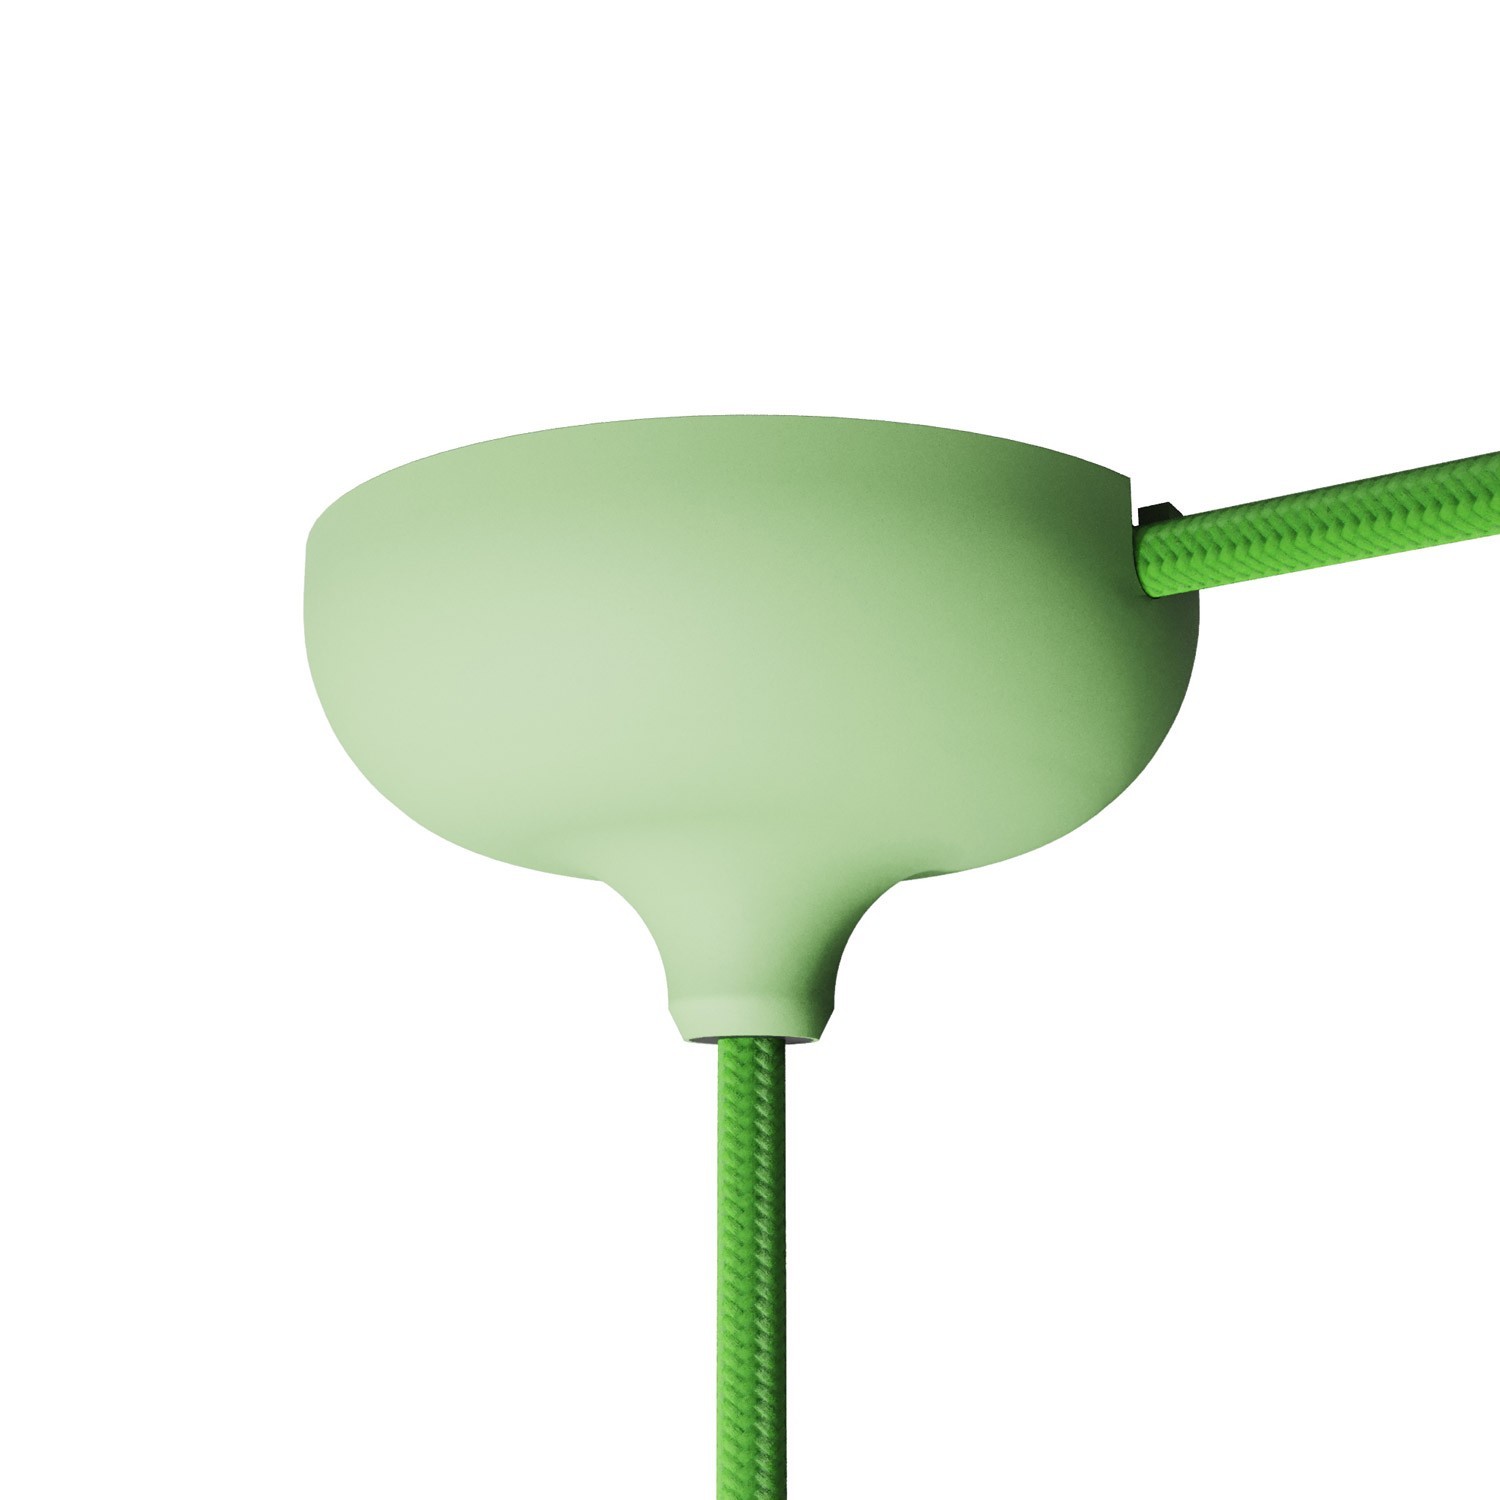 Silikonova-stropna-rozeta-so-stredovym-otvorom-v-zelenej-farbe.jpg